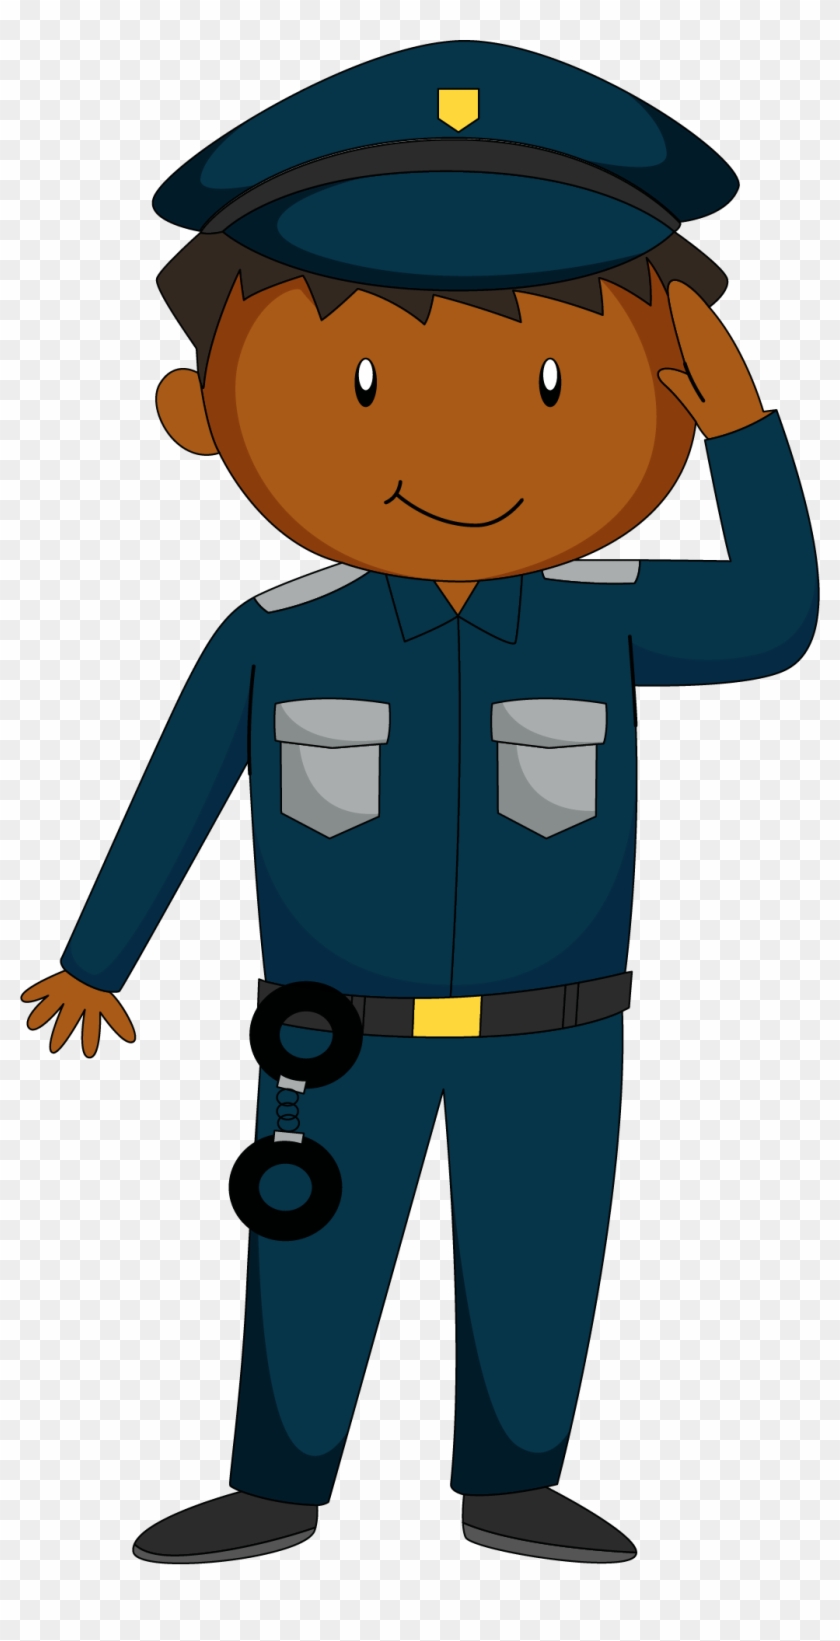 Salute Police Officer Cartoon - Police Officer Cartoon #447404